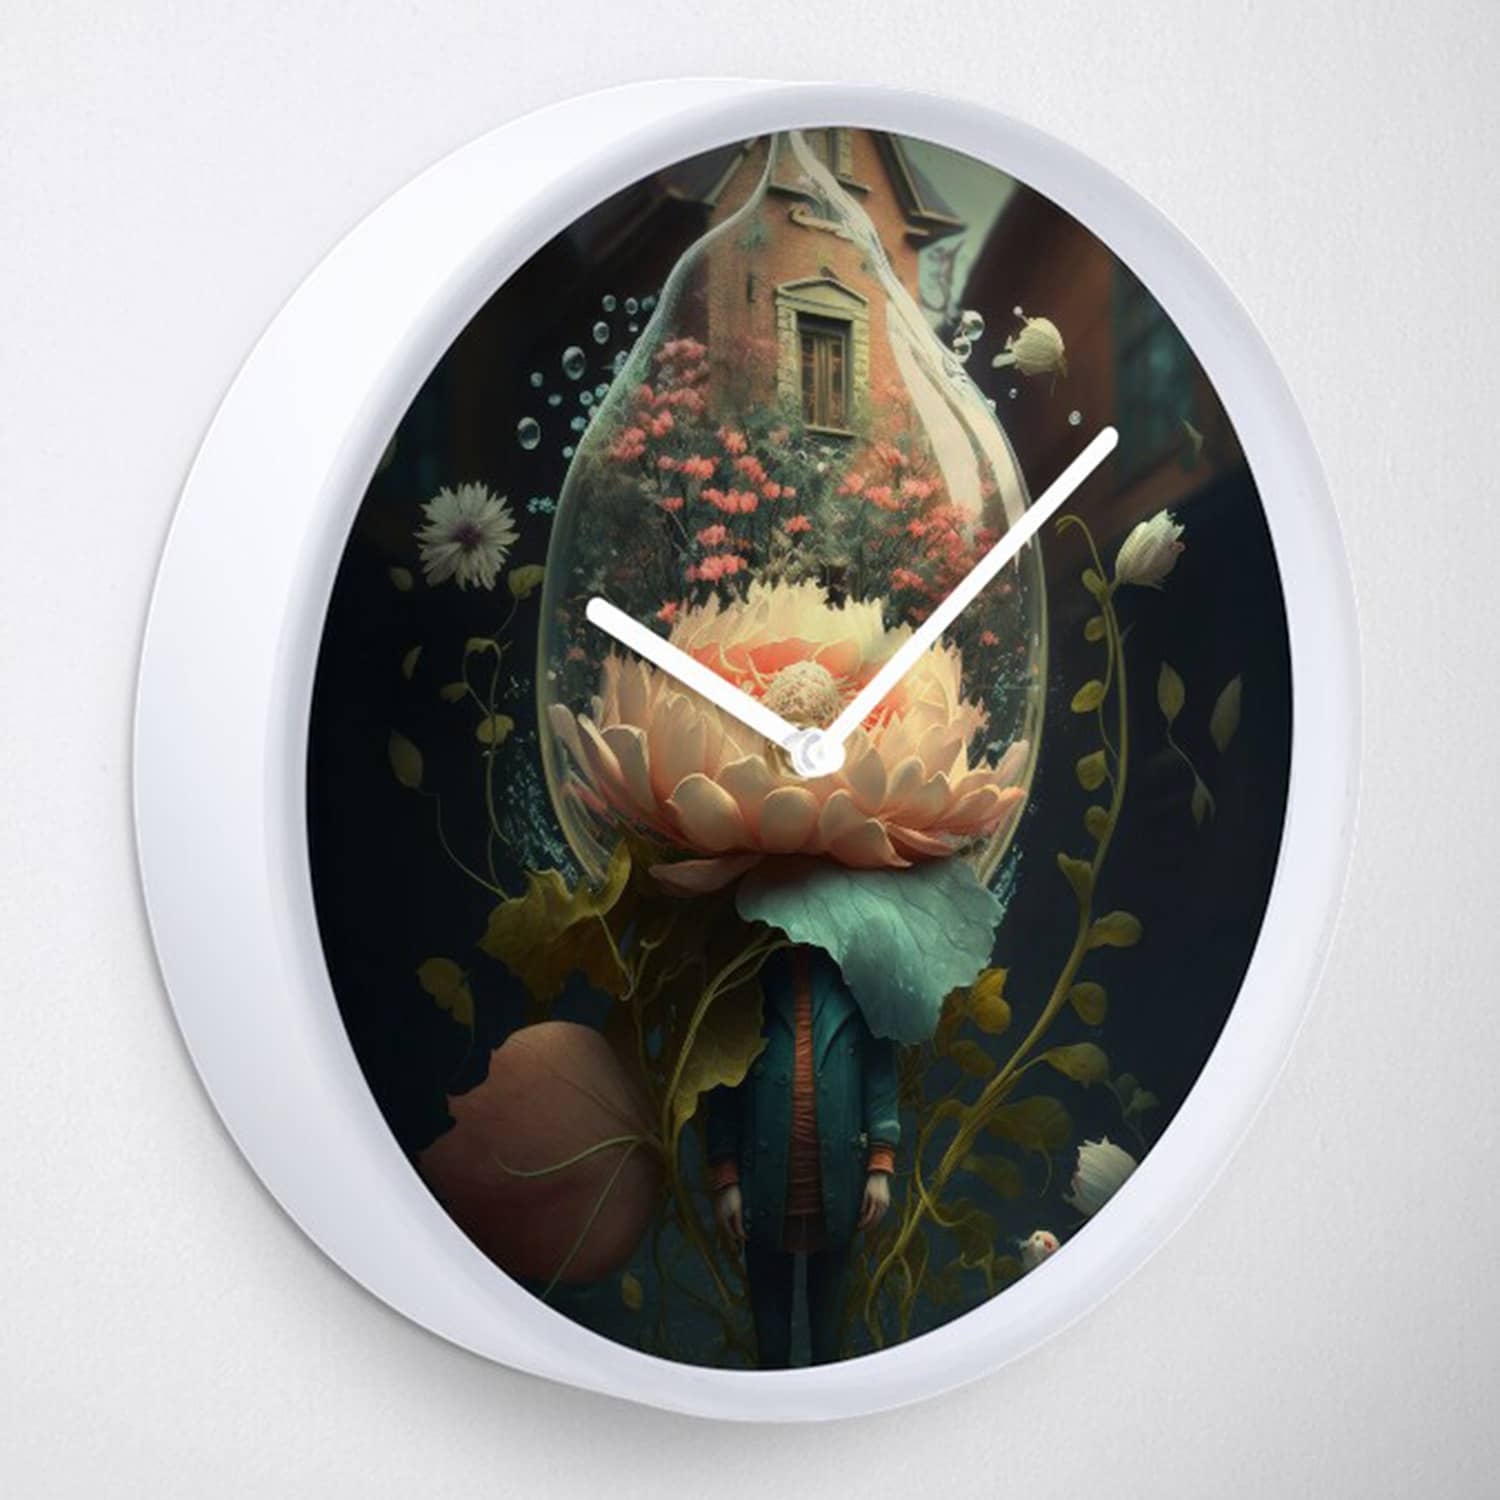 wall clock room decor by surreal AI art